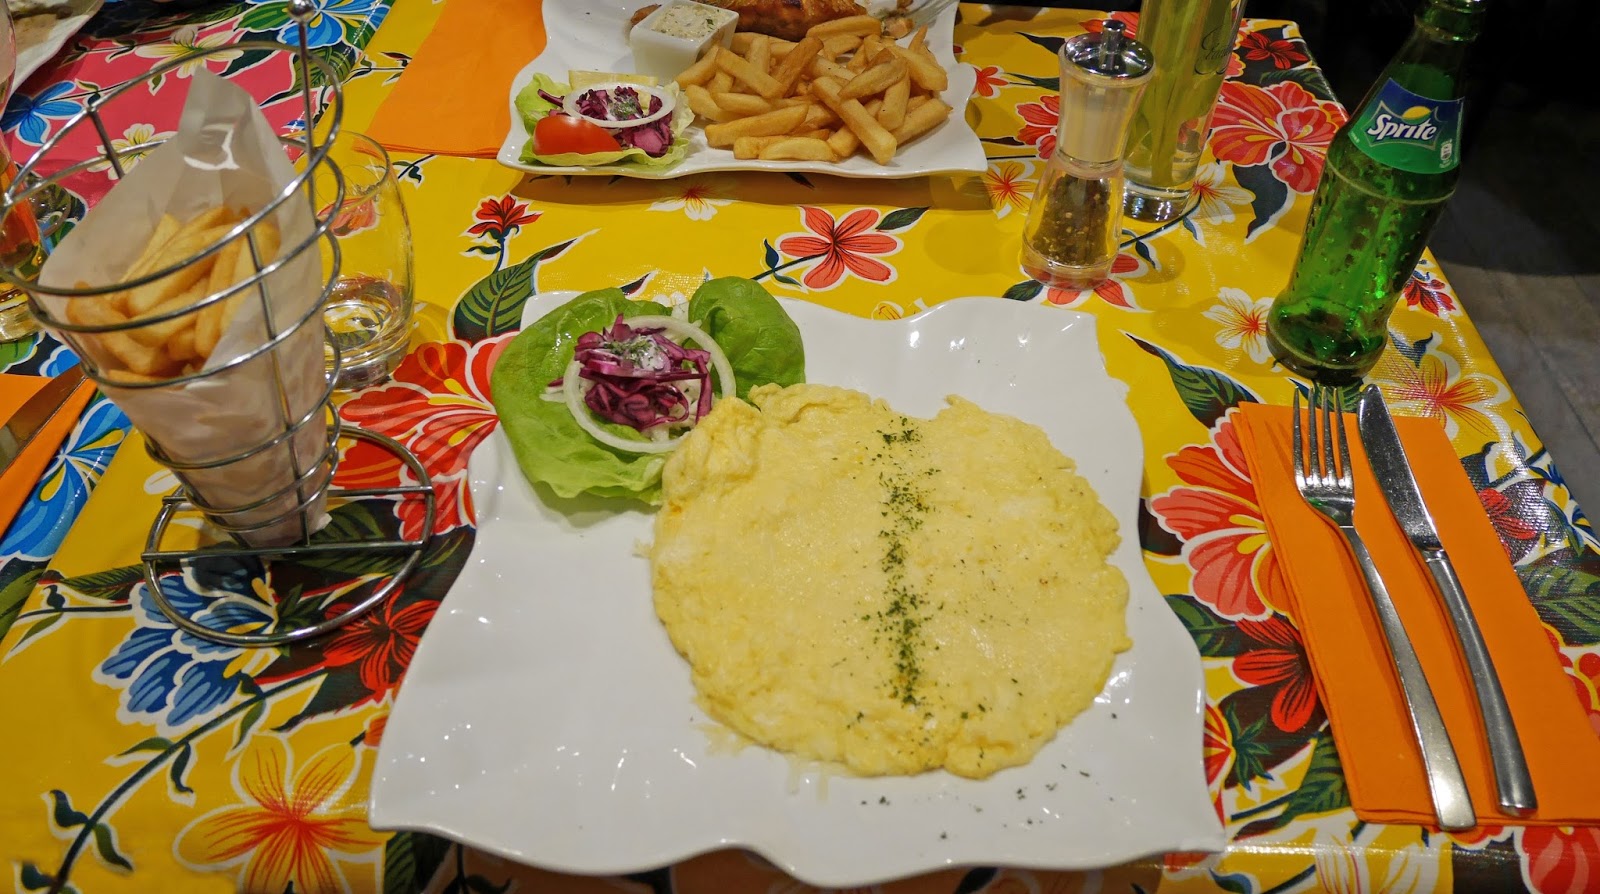 Omelette and fries for dinner at Arthie's Restaurant, Bruges